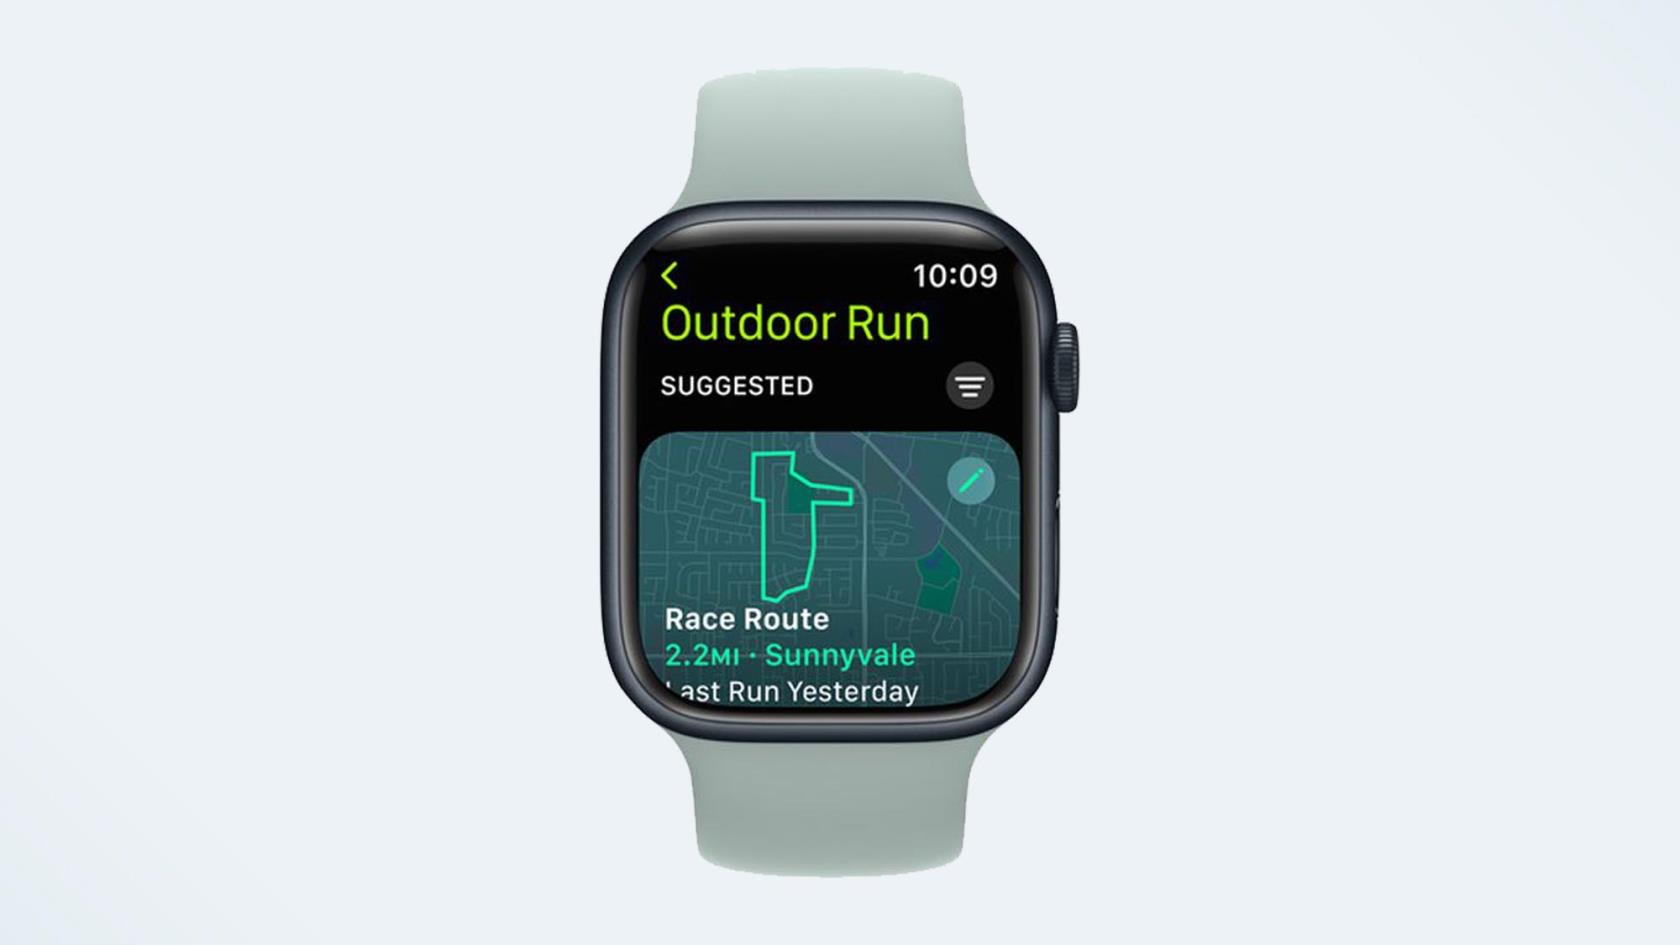 Usei esse novo recurso de condicionamento físico do Apple Watch para gamificar minha corrida semanal